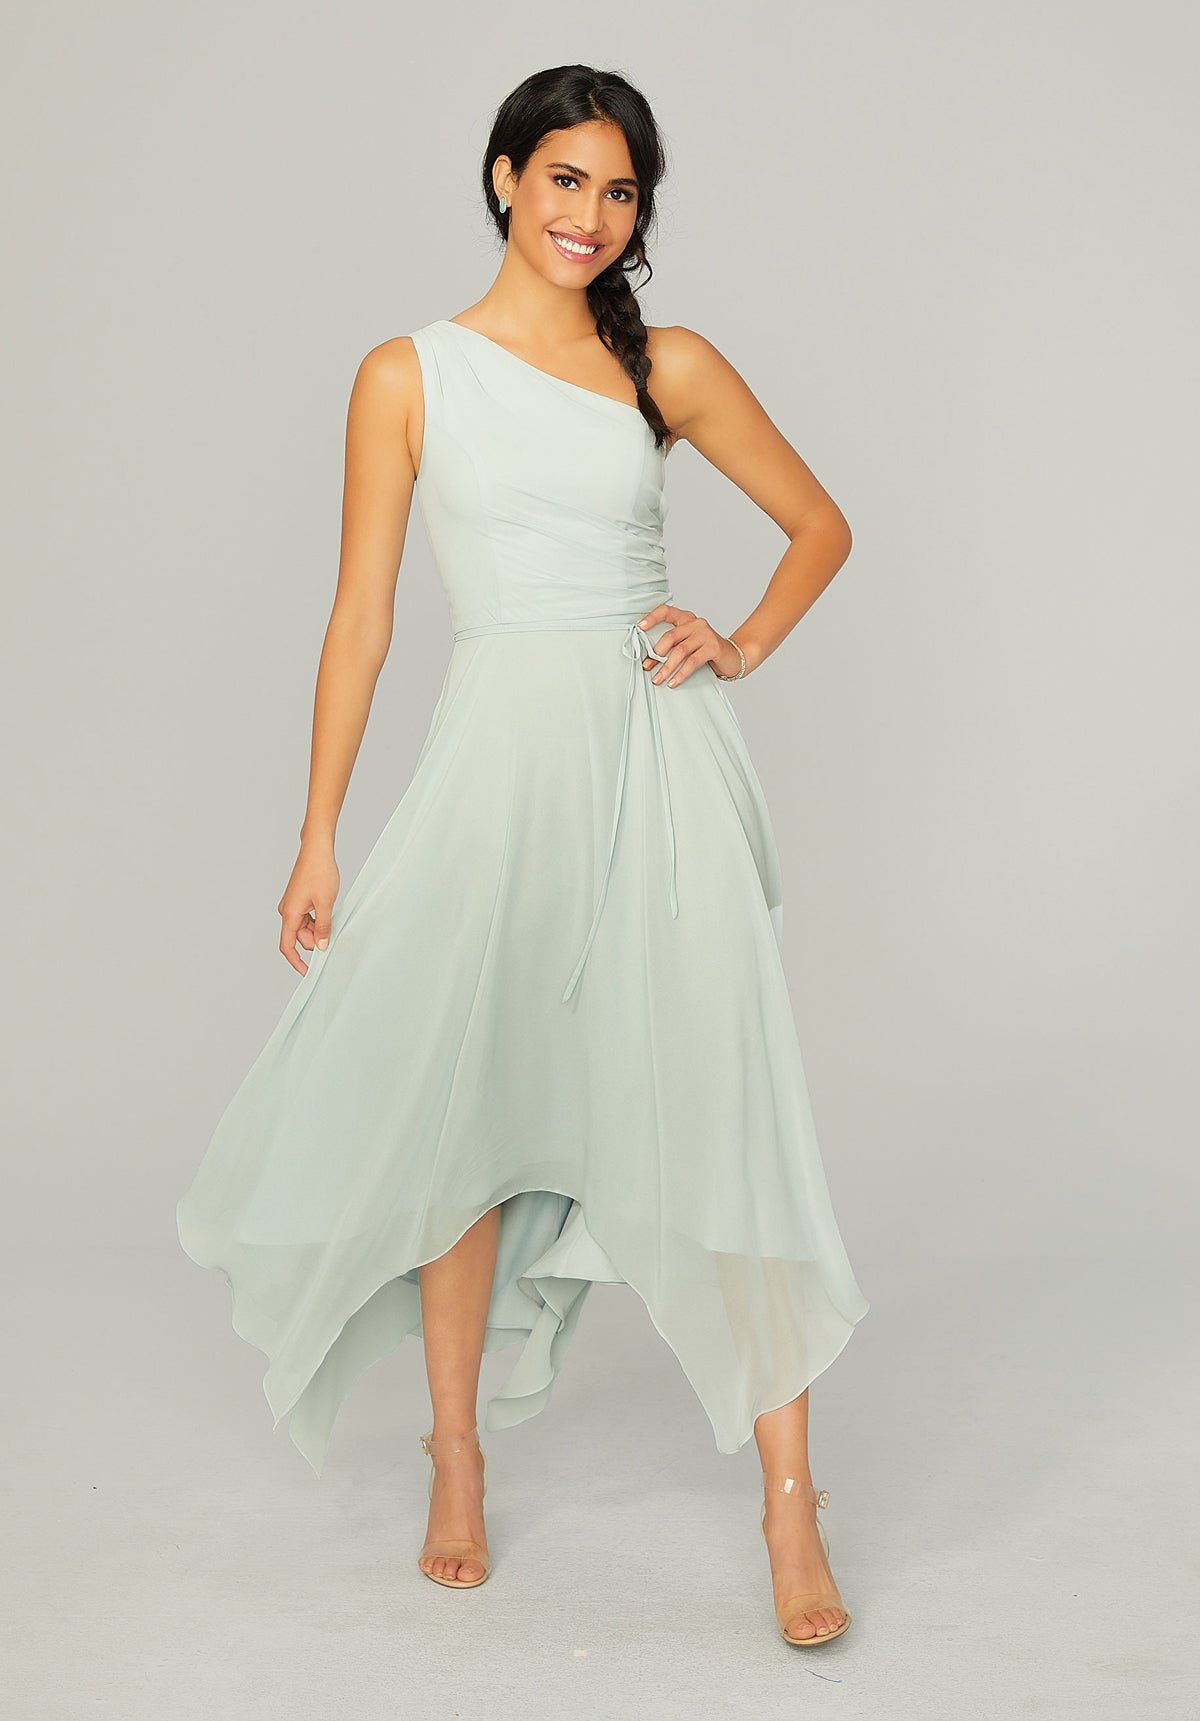 Morilee - 21770 - Cheron's Bridal, Bridesmaids Dress